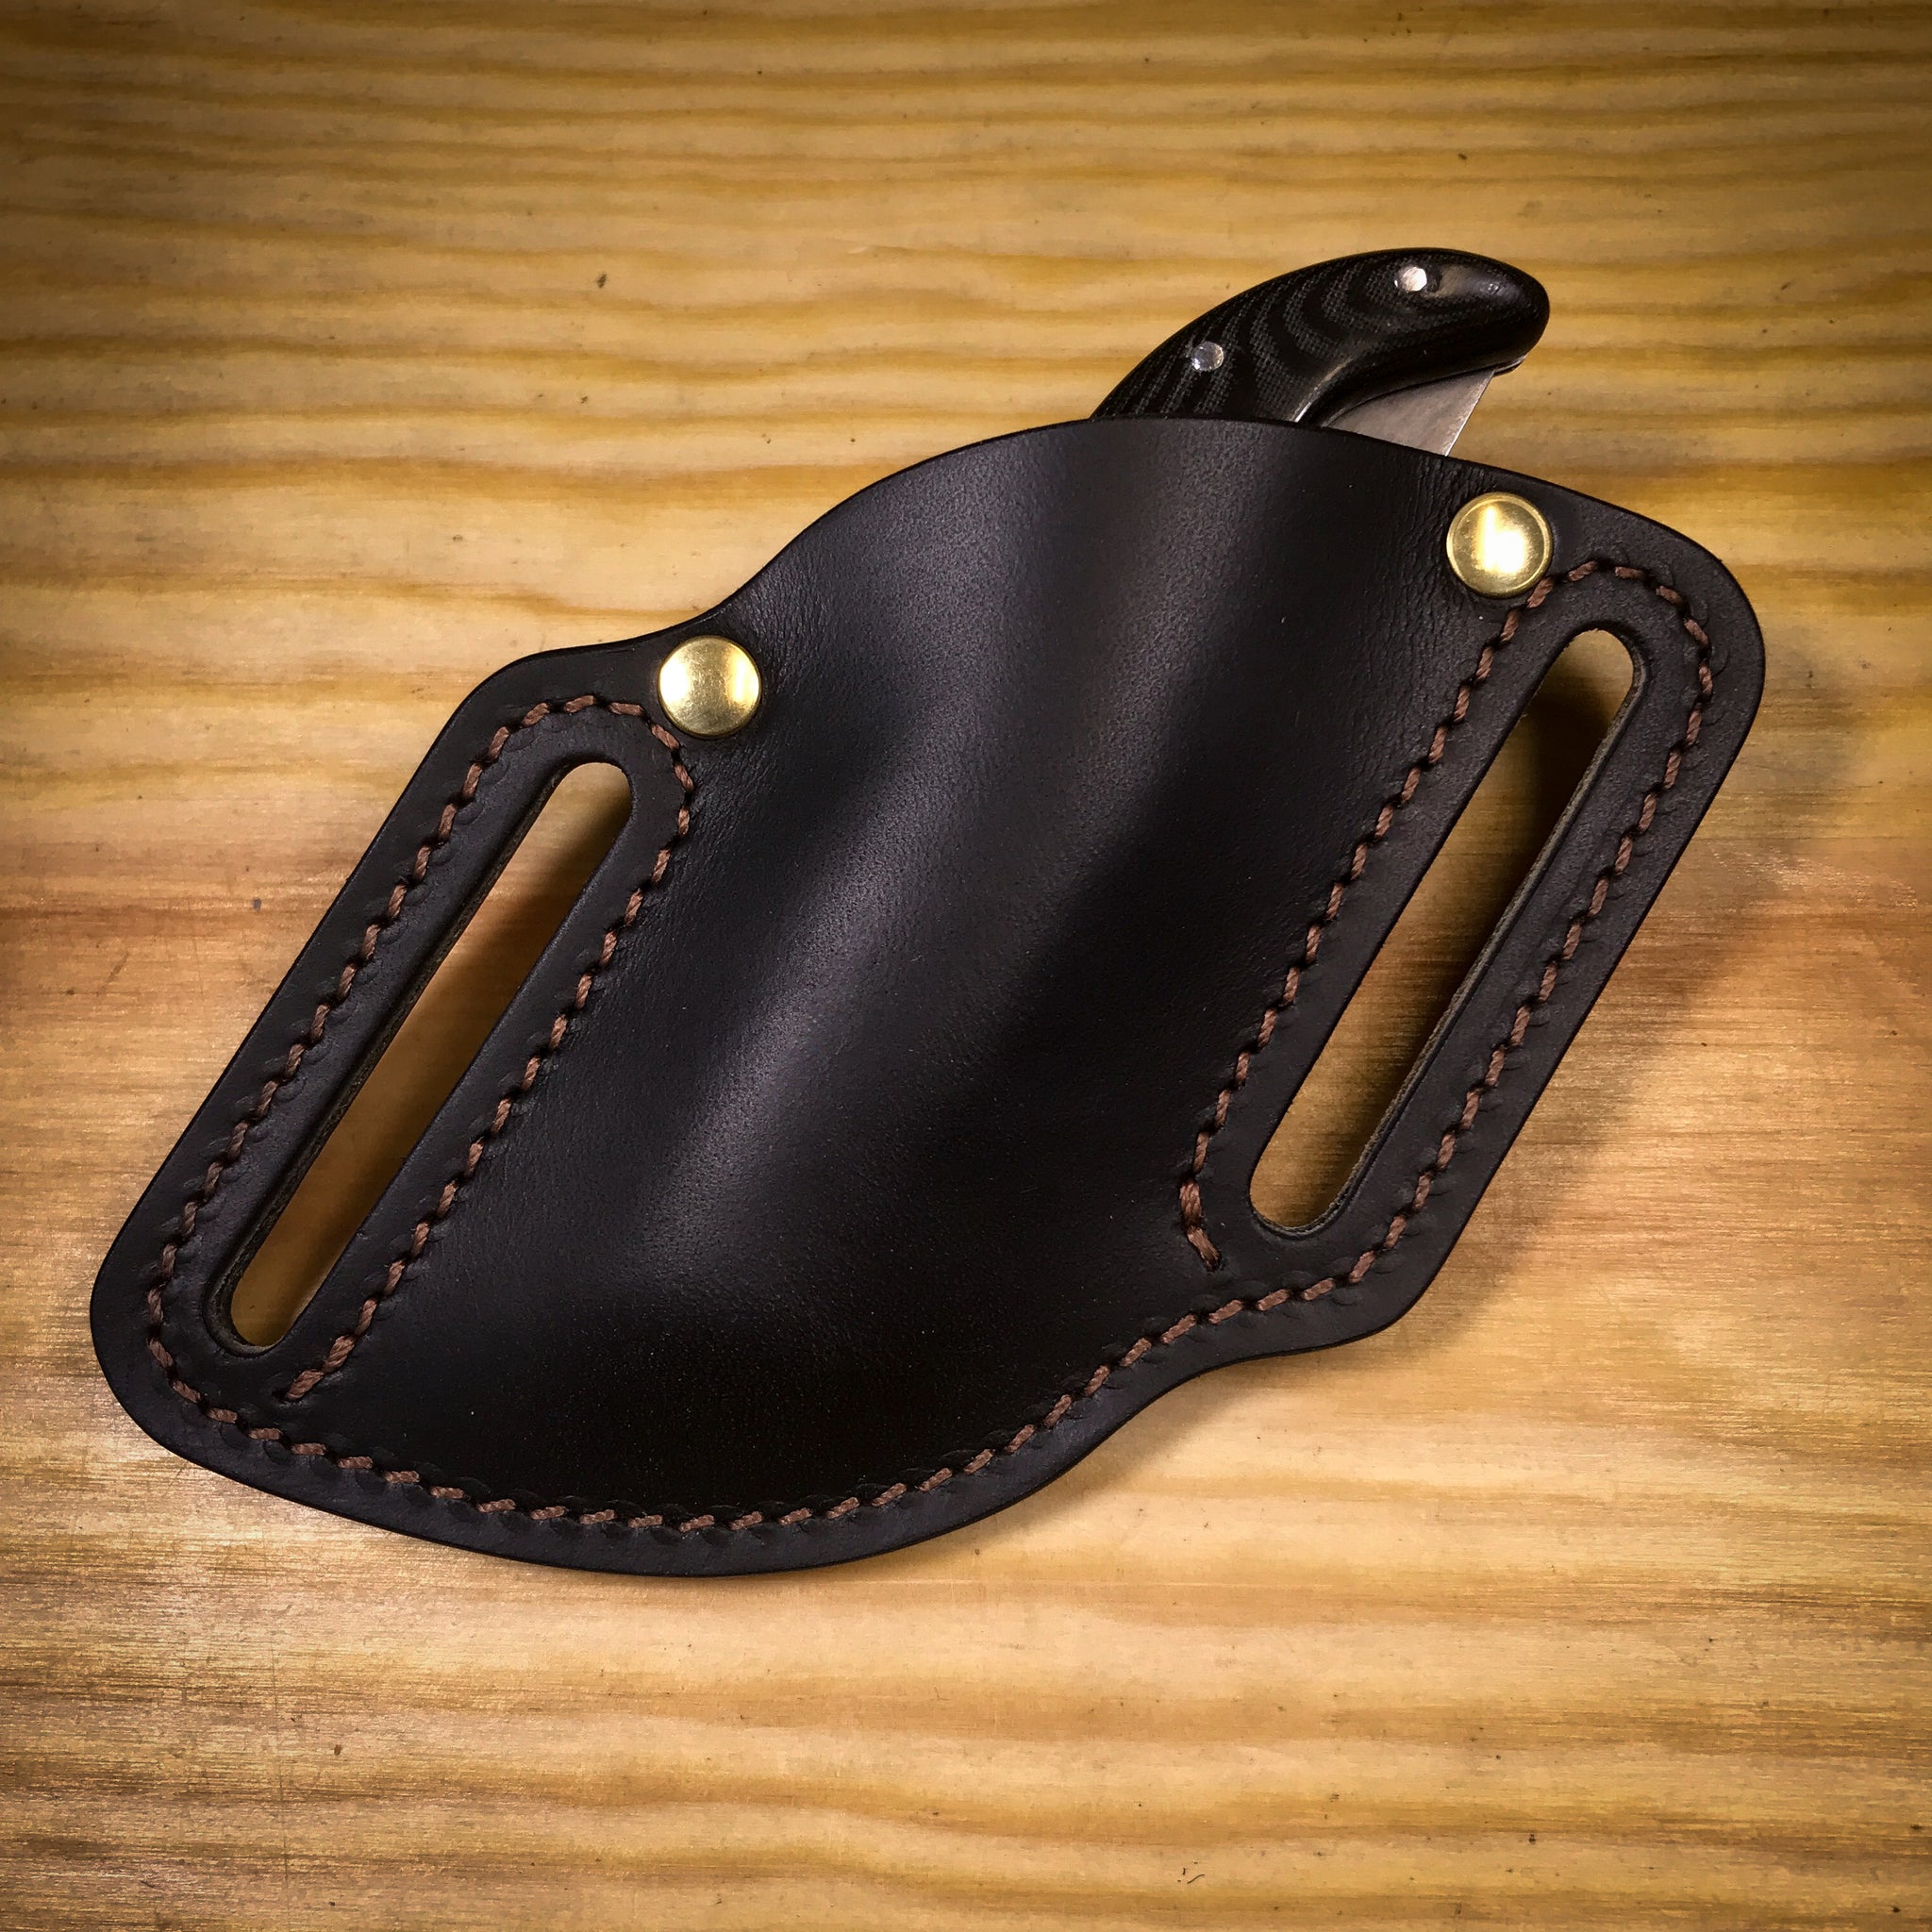 Pancake pocket knife - TexuCrafts sheath leather